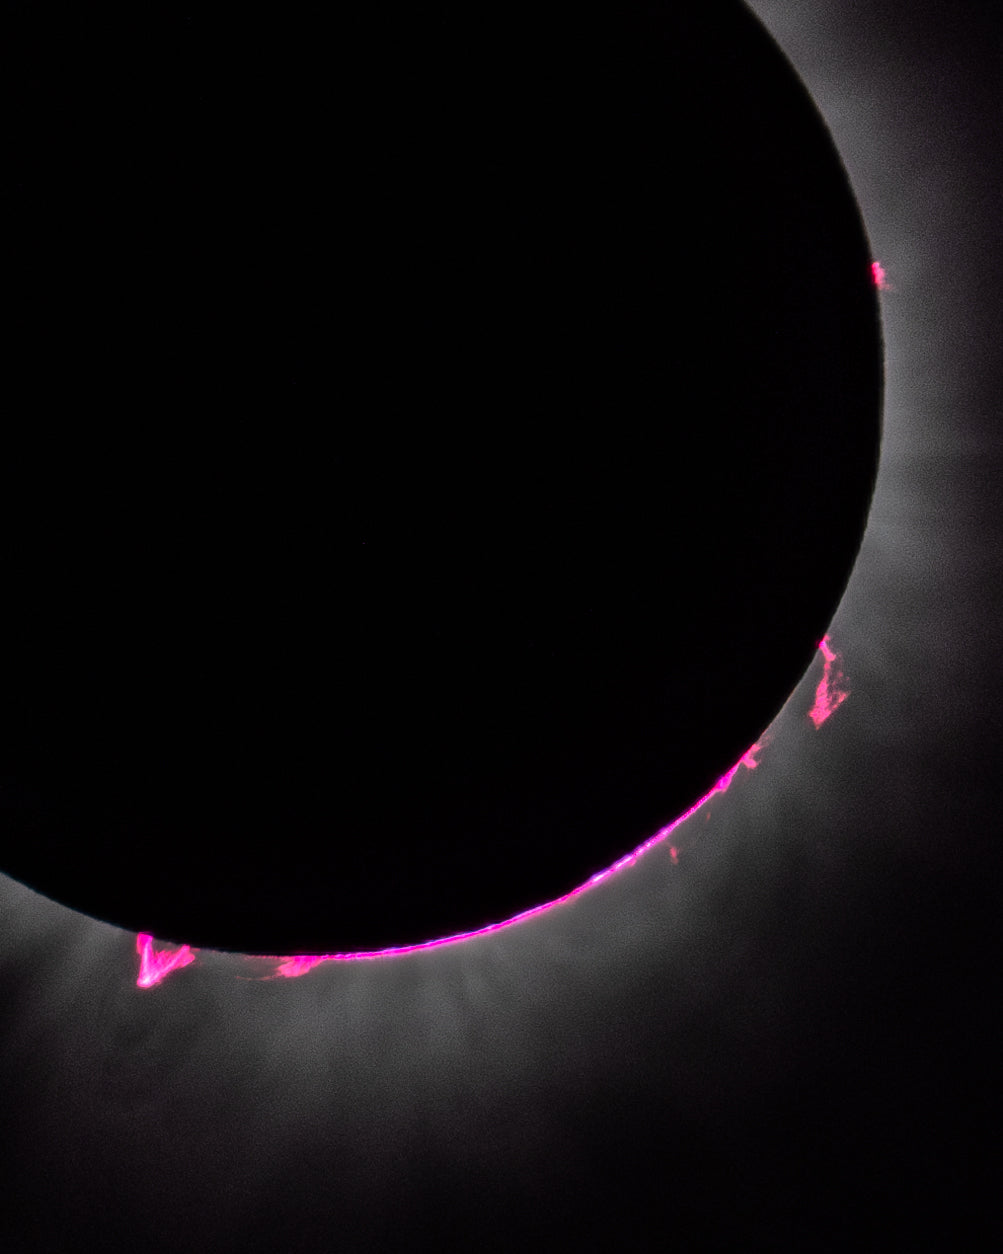 Eclipse 2024 - Prominences